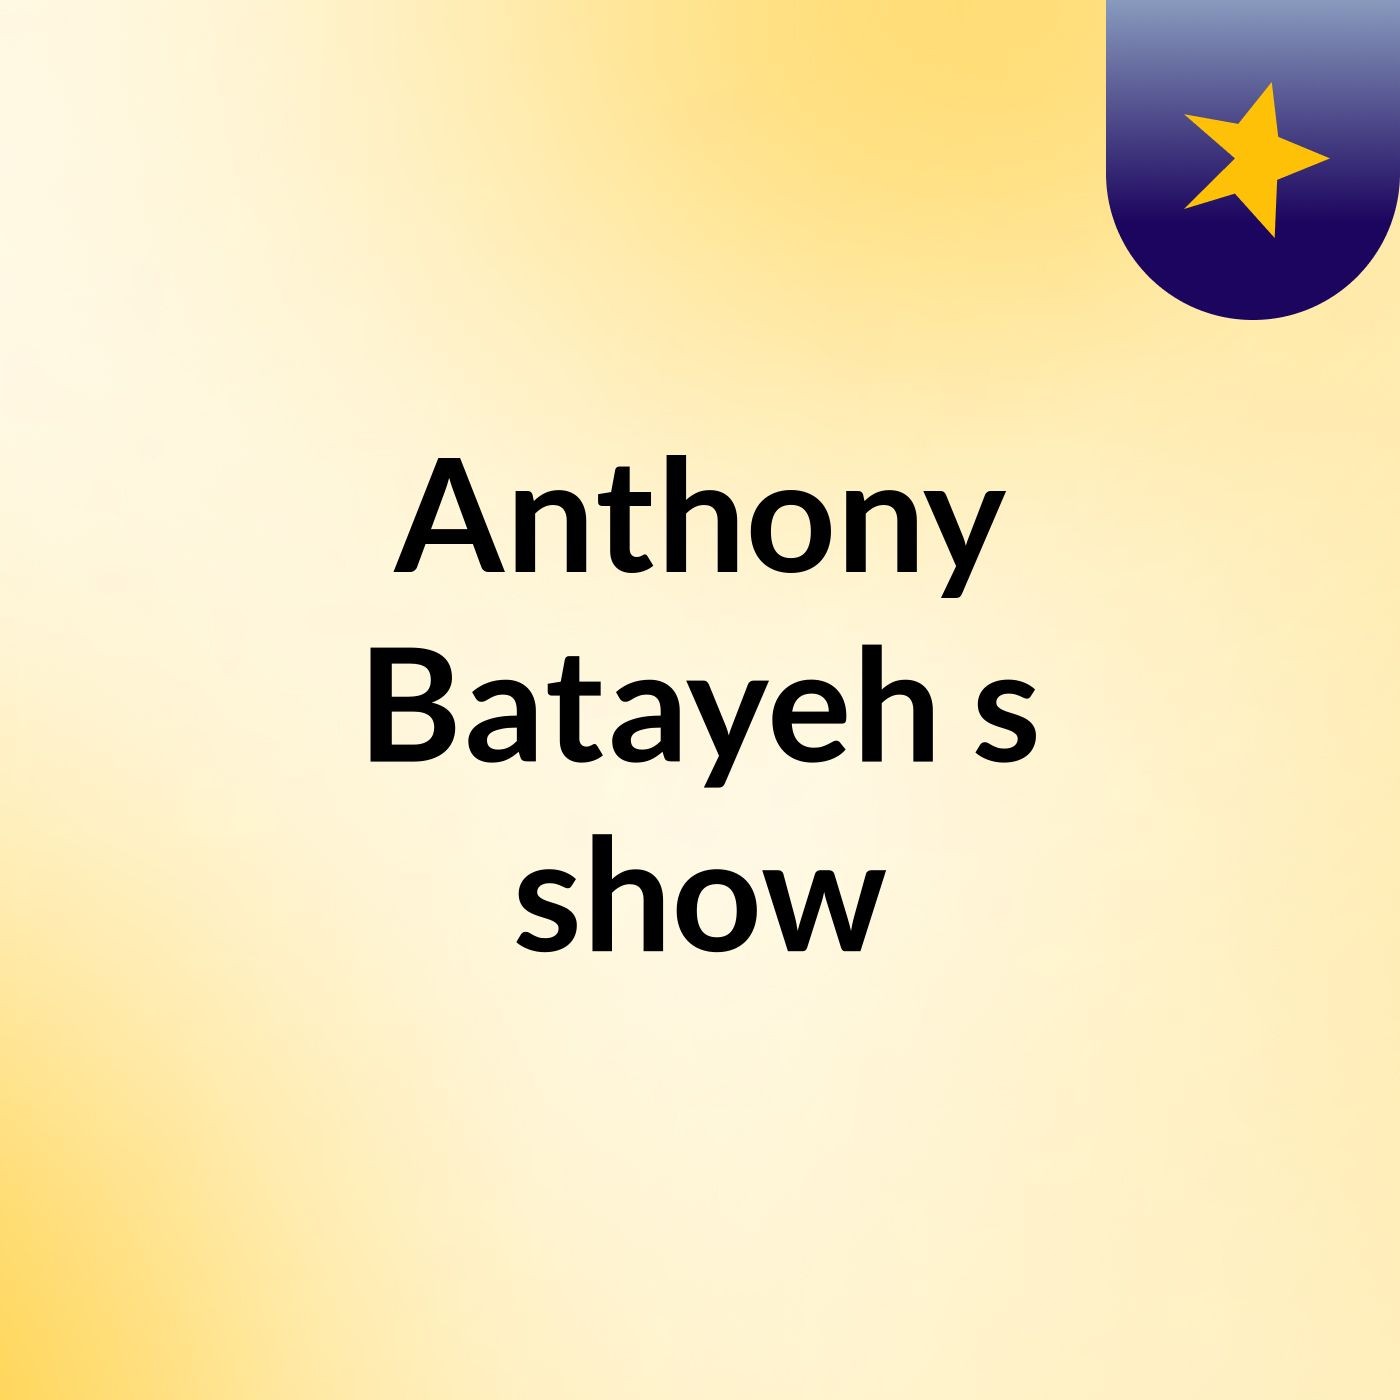 Anthony Batayeh's show